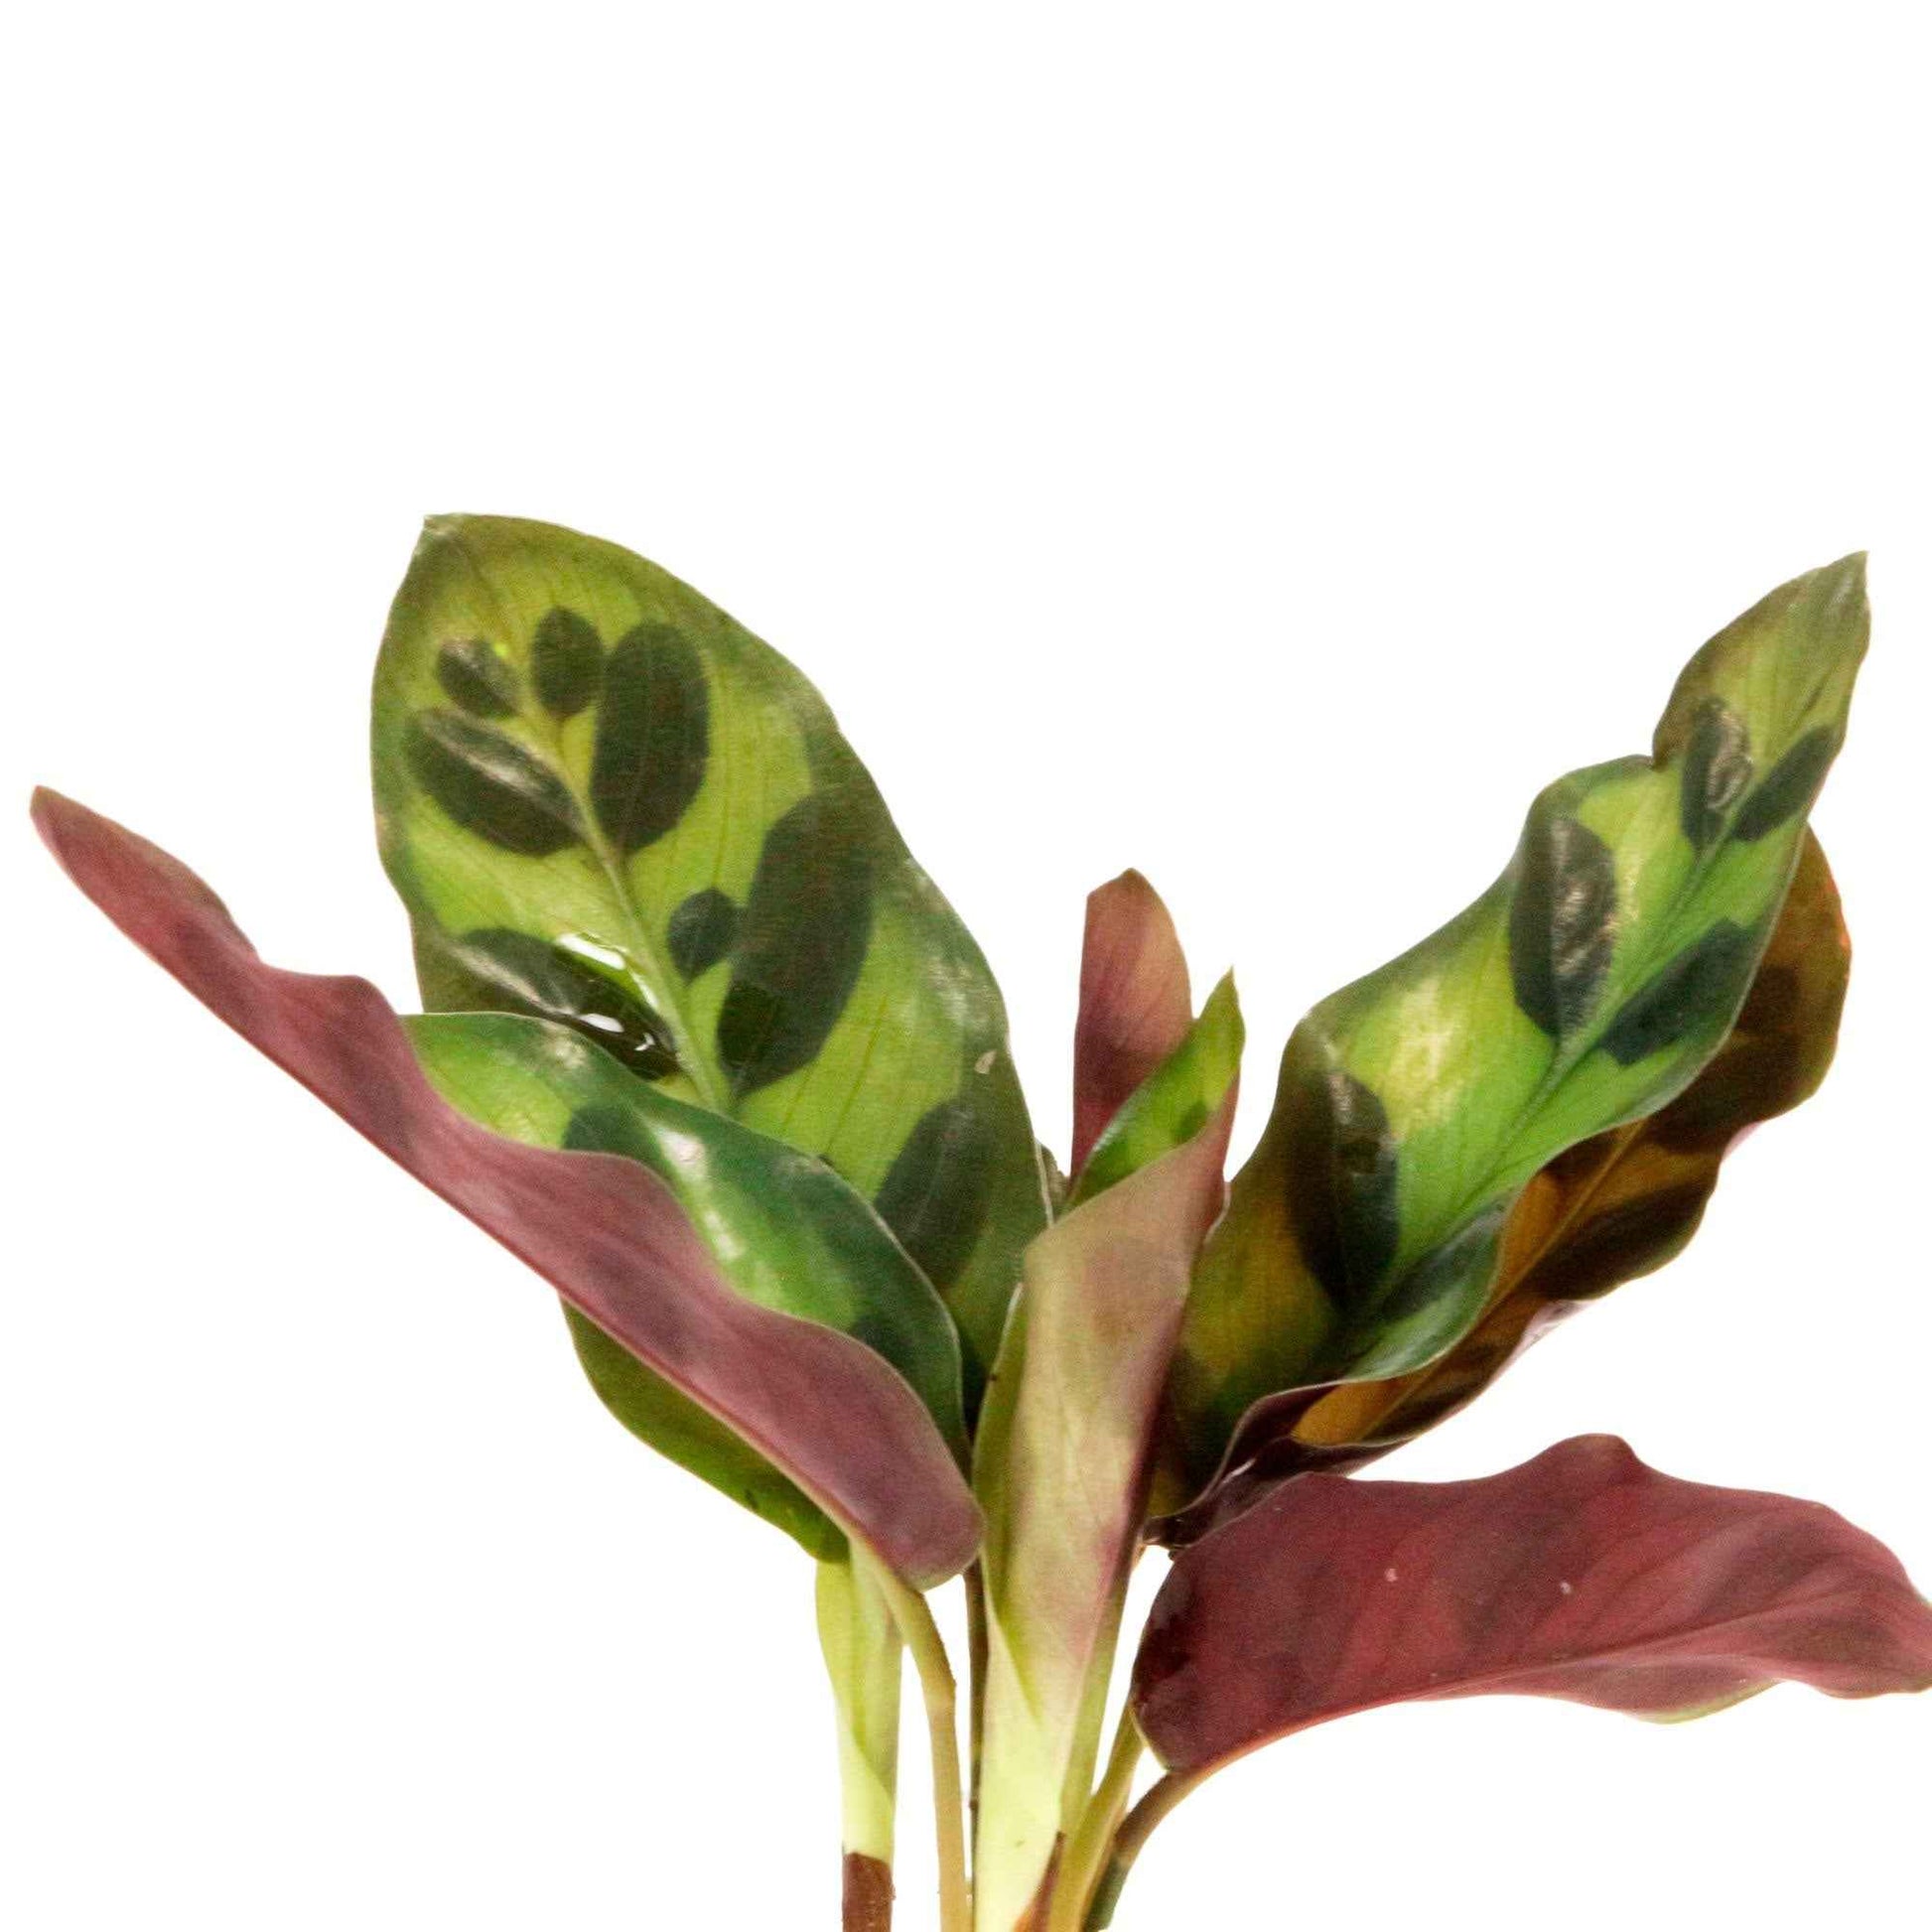 Calathea im Samoa-Glas - Hydroponik (x2) - Calathea insignis - Zimmerpflanzen Sets